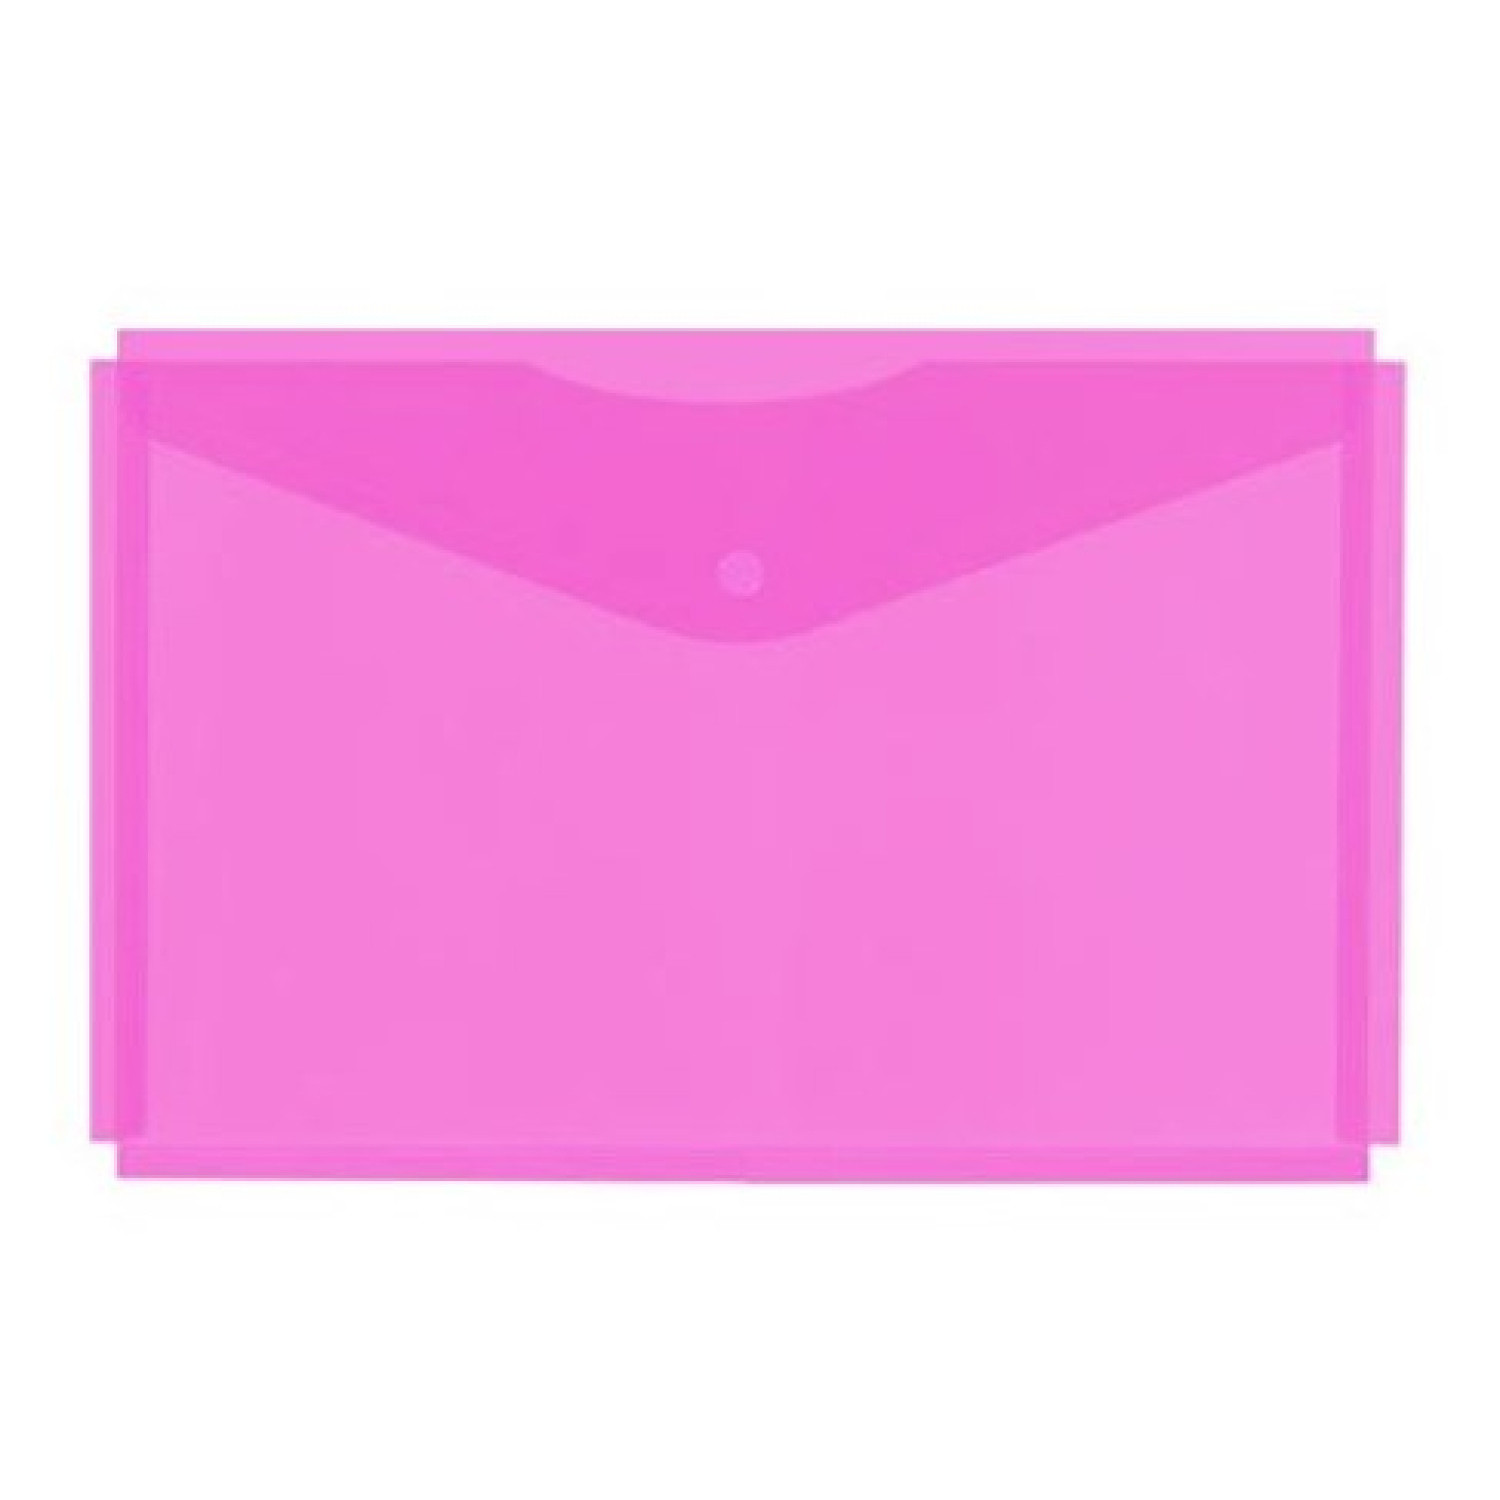 Папка Office Zone с копче, А4 с уширение, розова